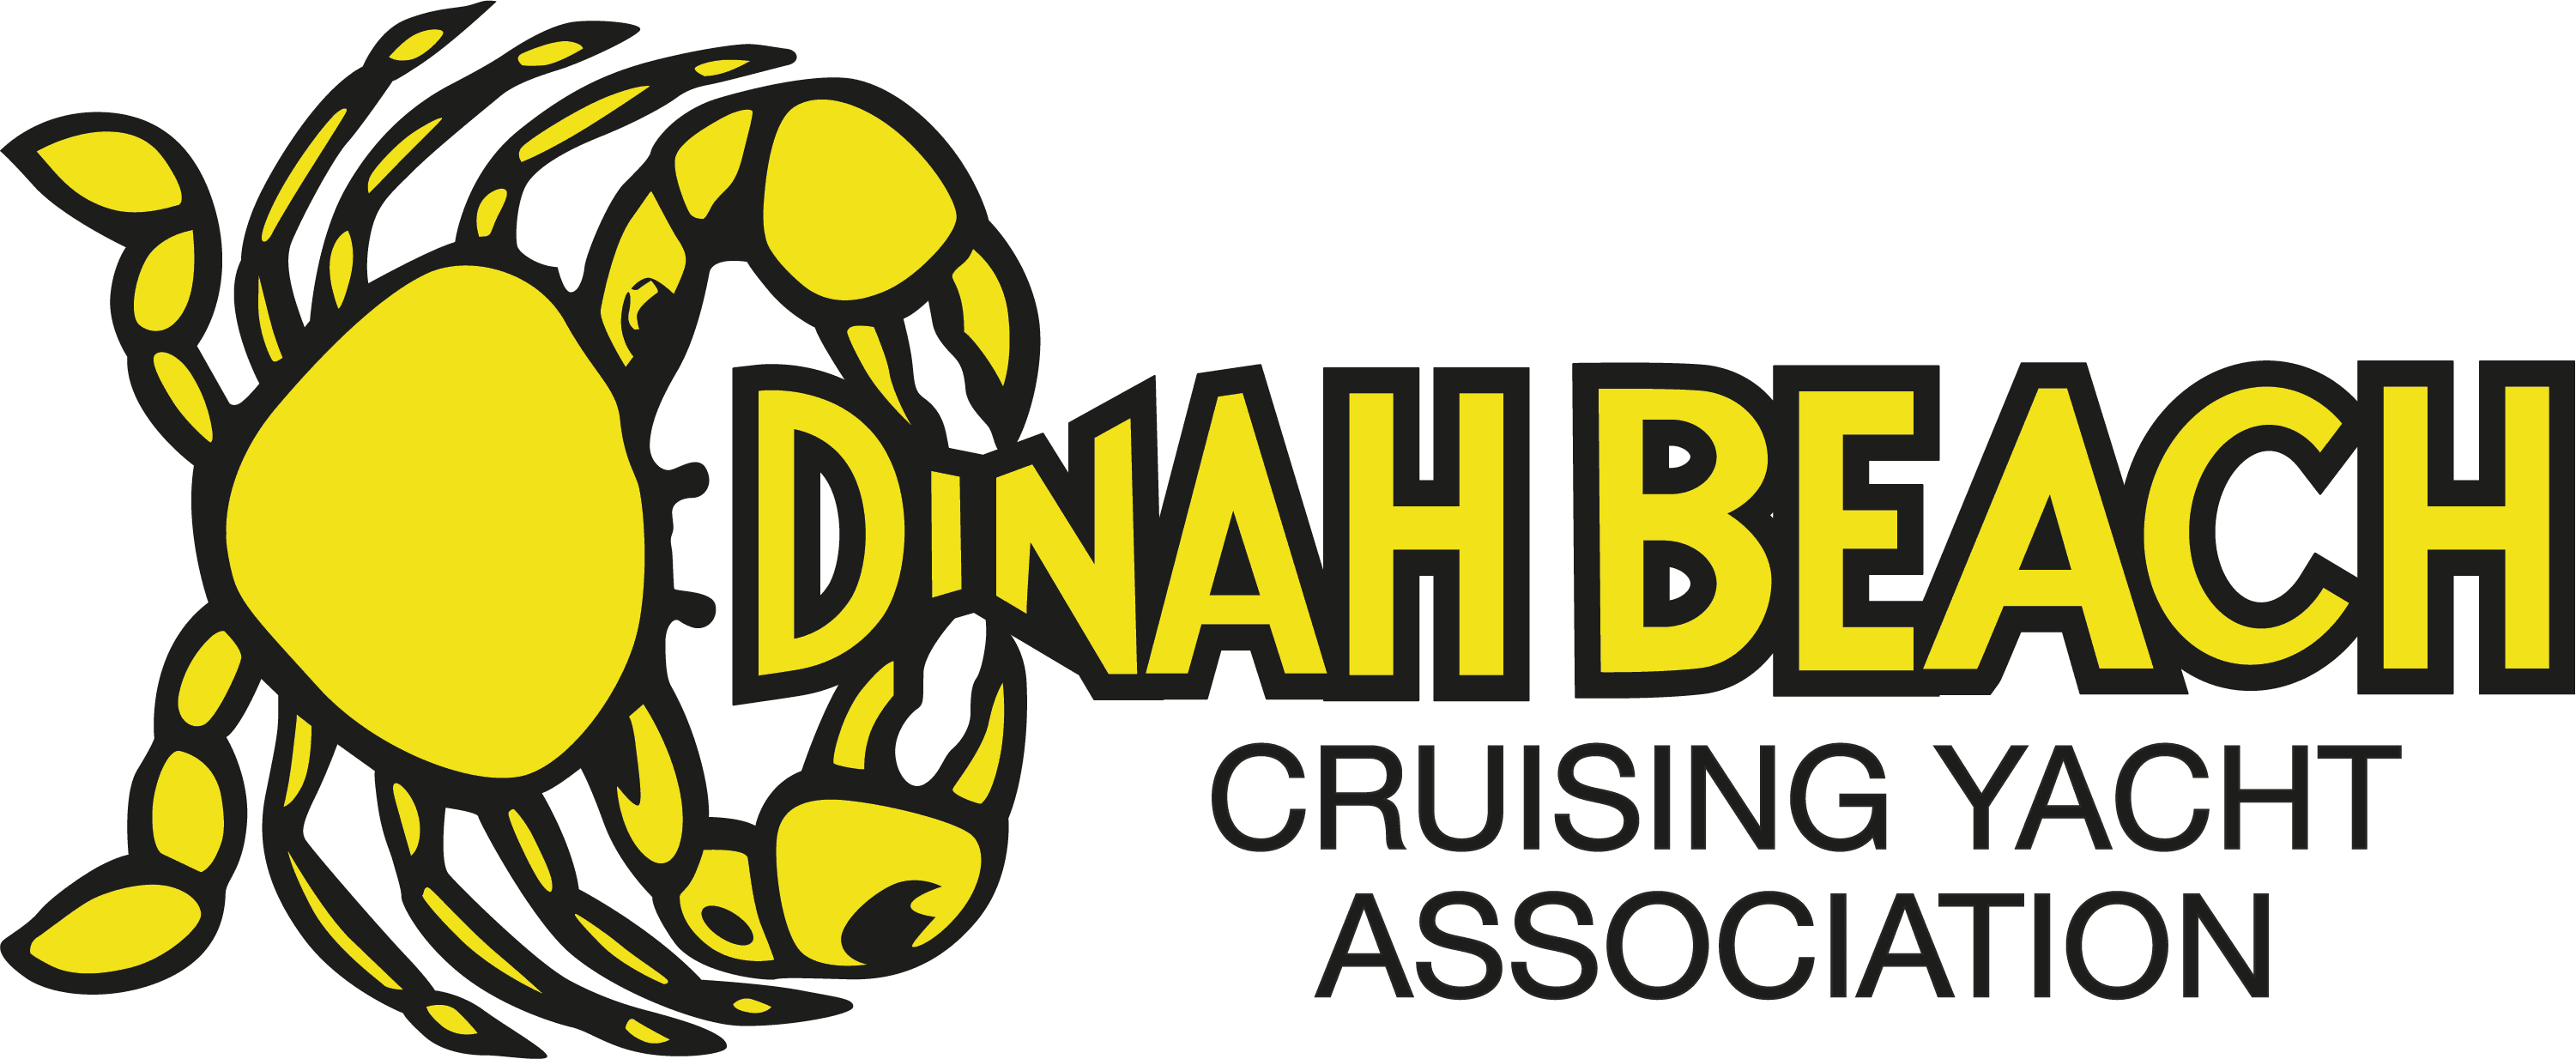 Dinah Beach Cruising Yacht Association Logo